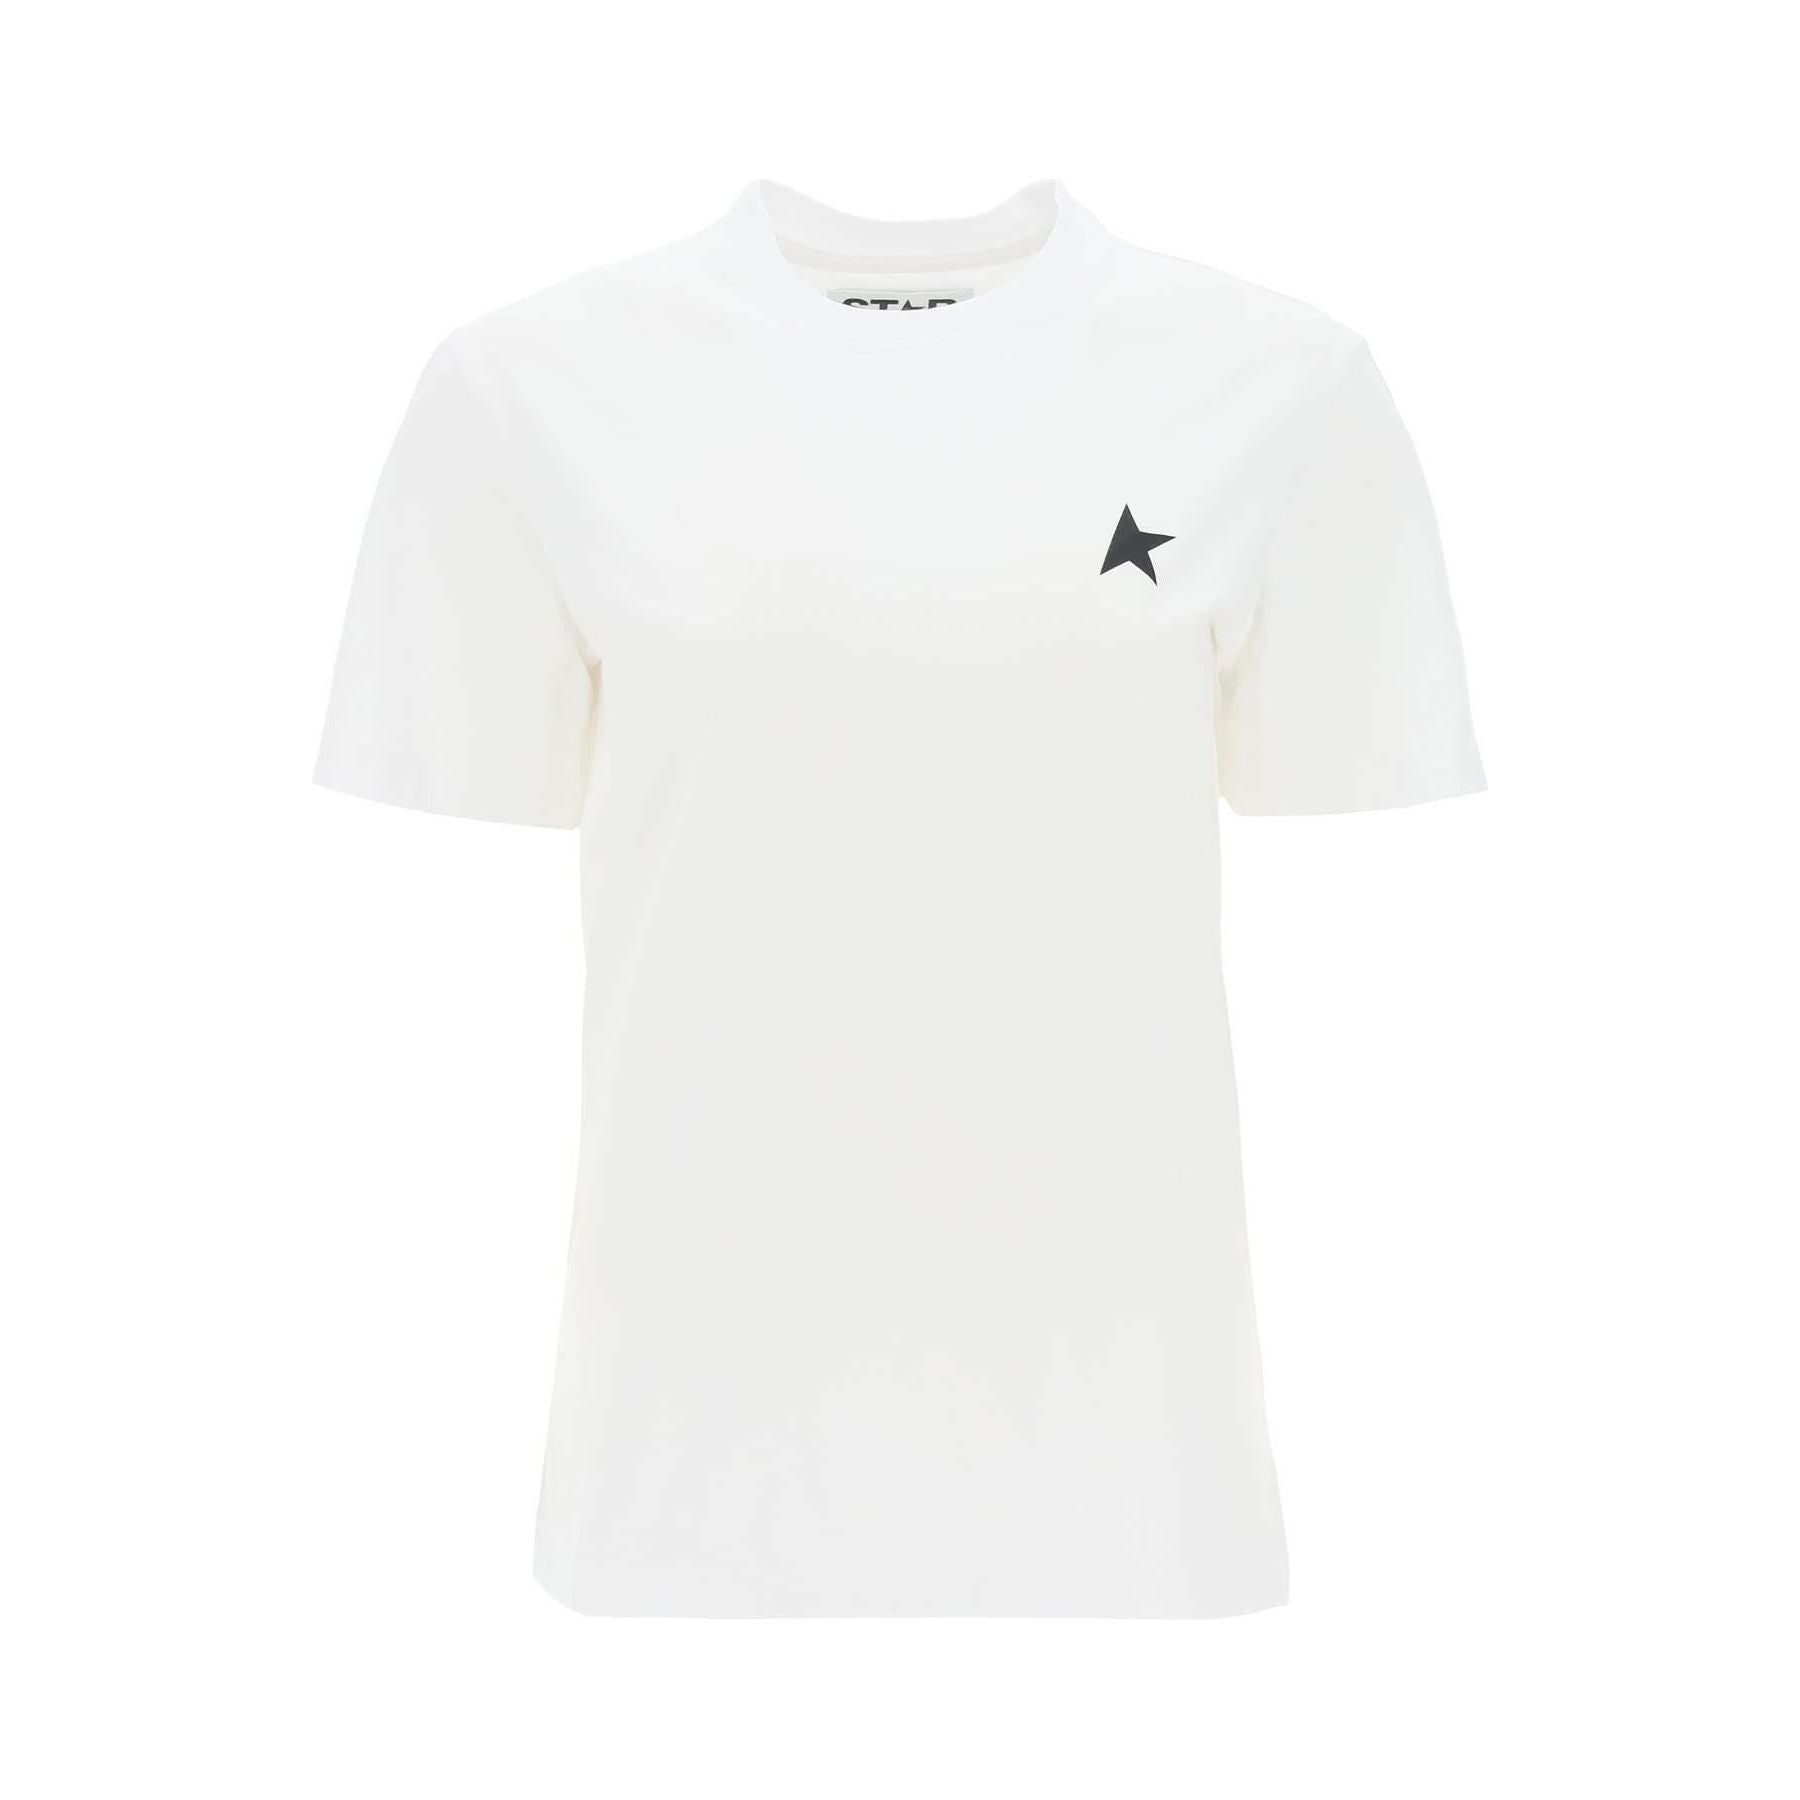 Regular T-Shirt With Star Logo GOLDEN GOOSE JOHN JULIA.